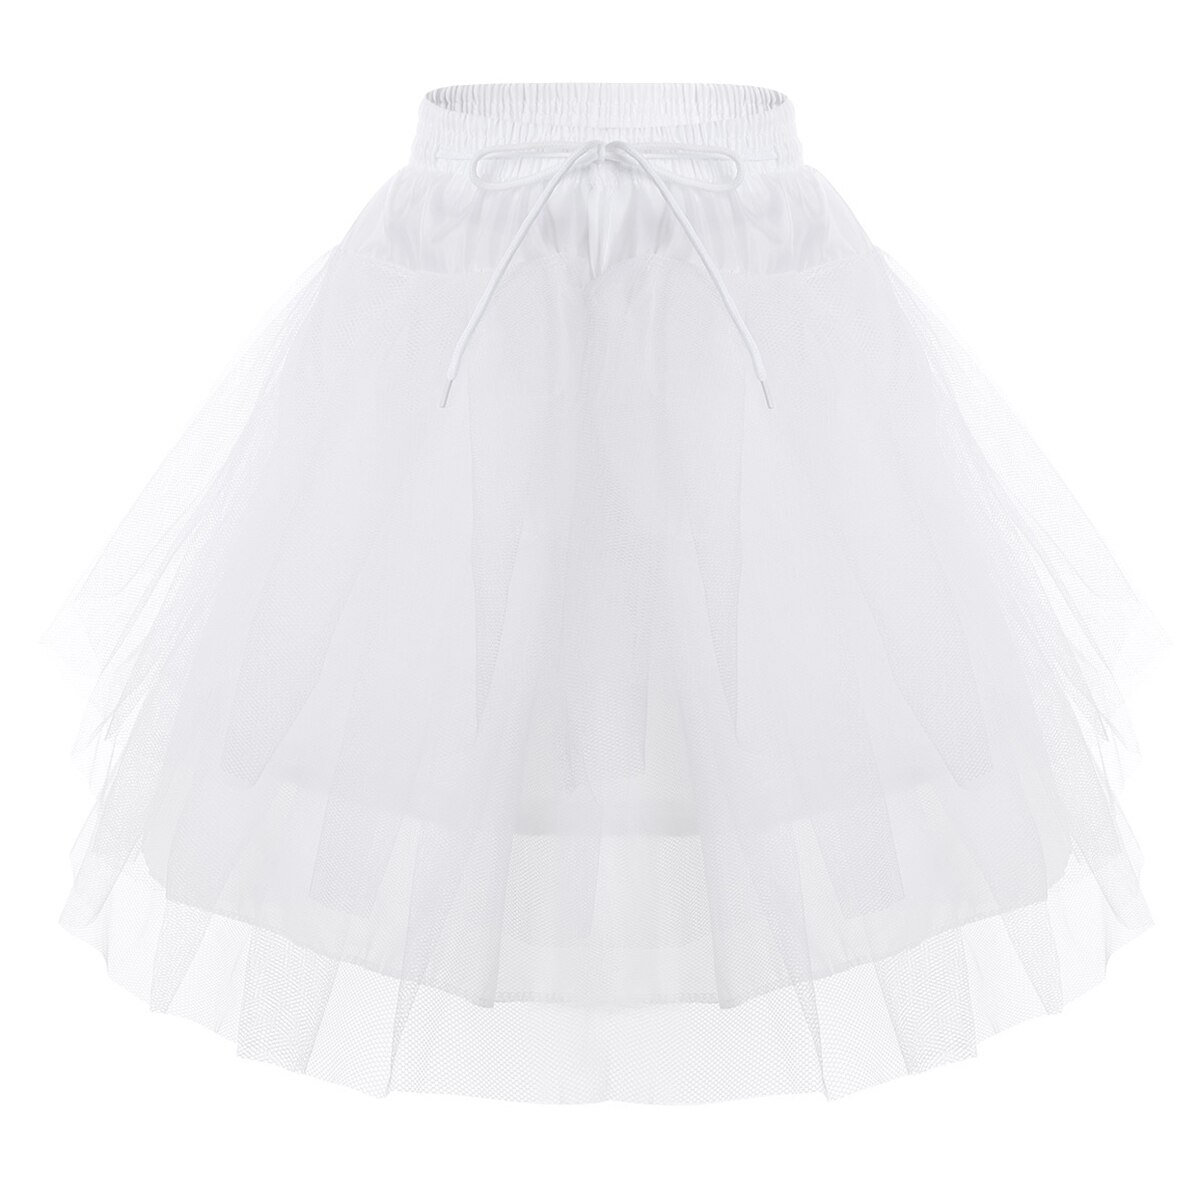 Iefiel børn piger båndløse 3 lag netting fluffy a-line underkjole underkjole crinoline slip til bryllup blomsterpiger underkjole: Hvid